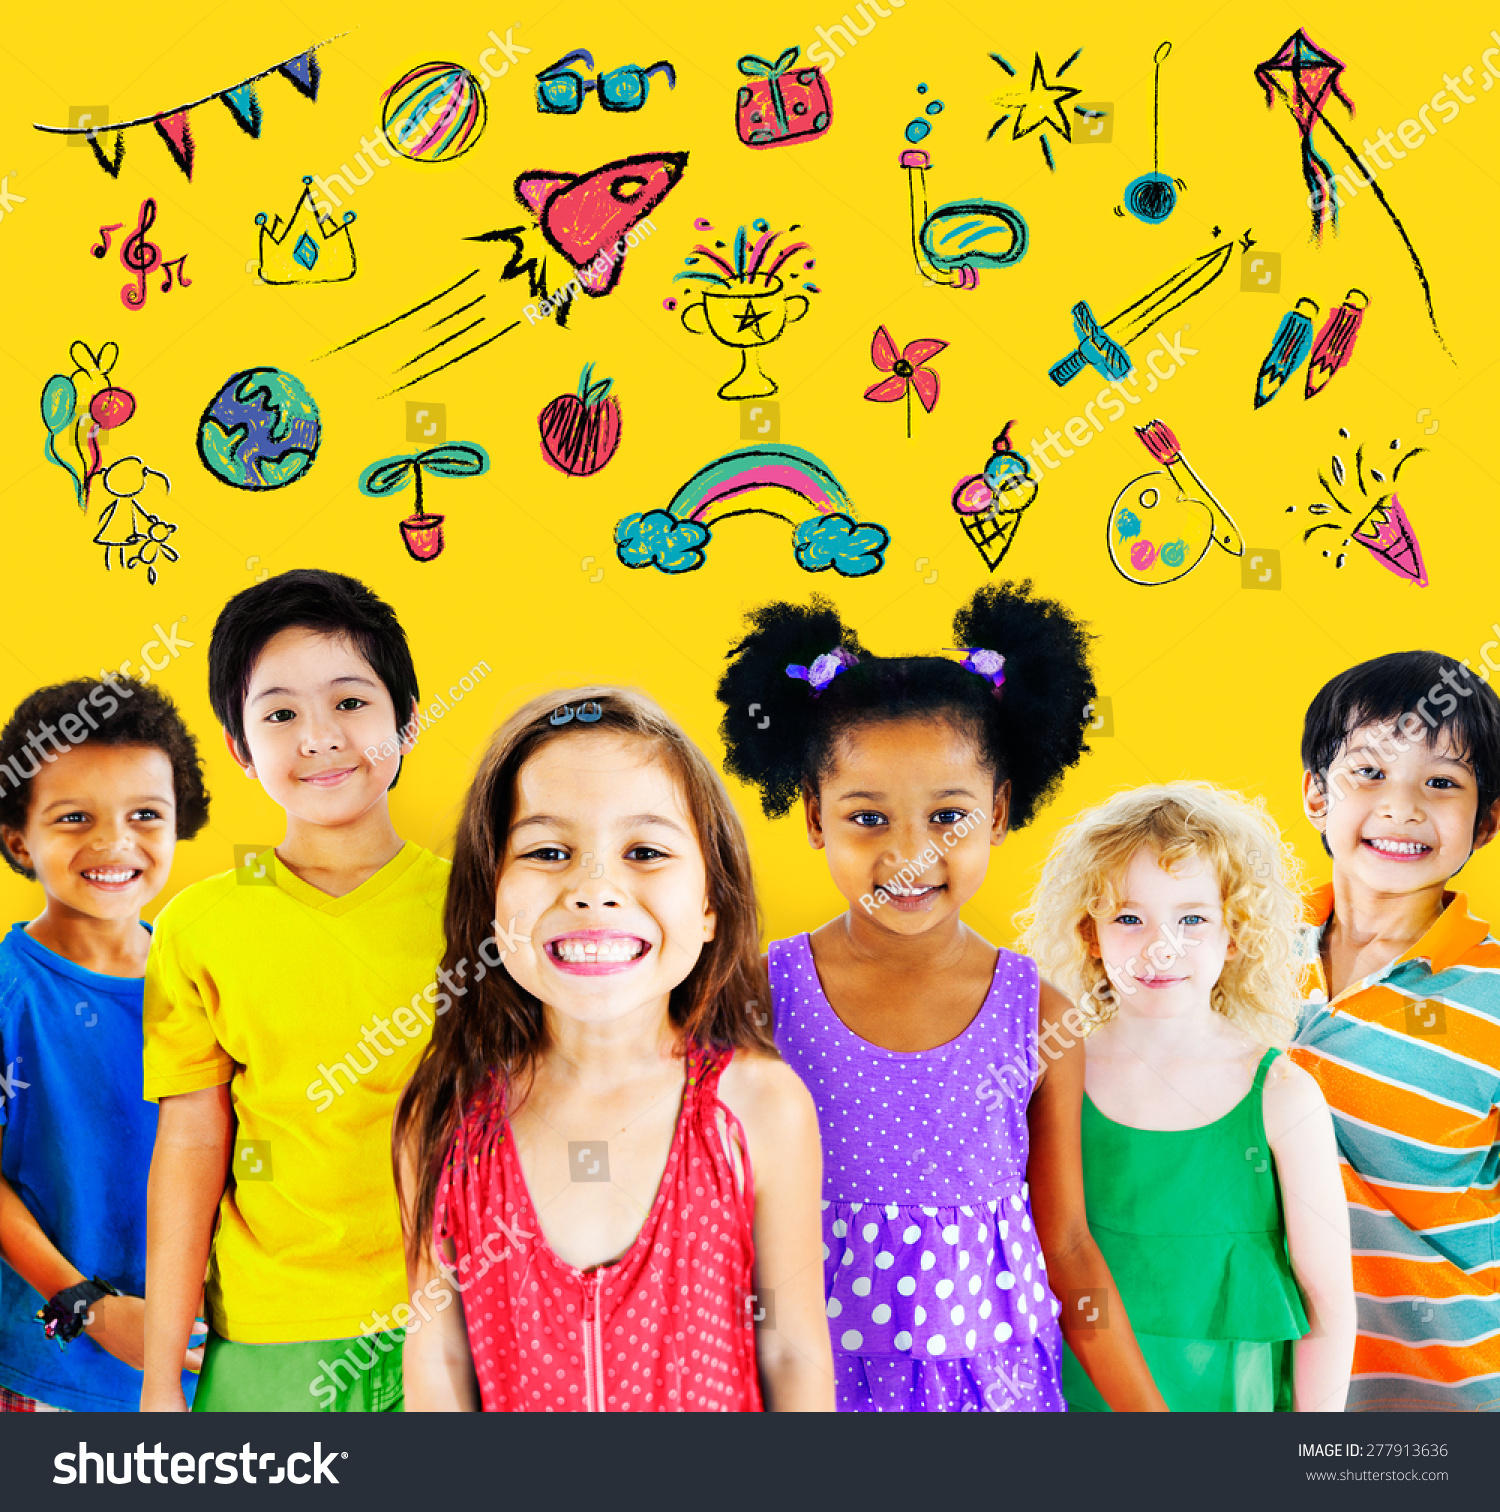 Kids Childhood Leisure Activity Education Concept Stock Photo 277913636